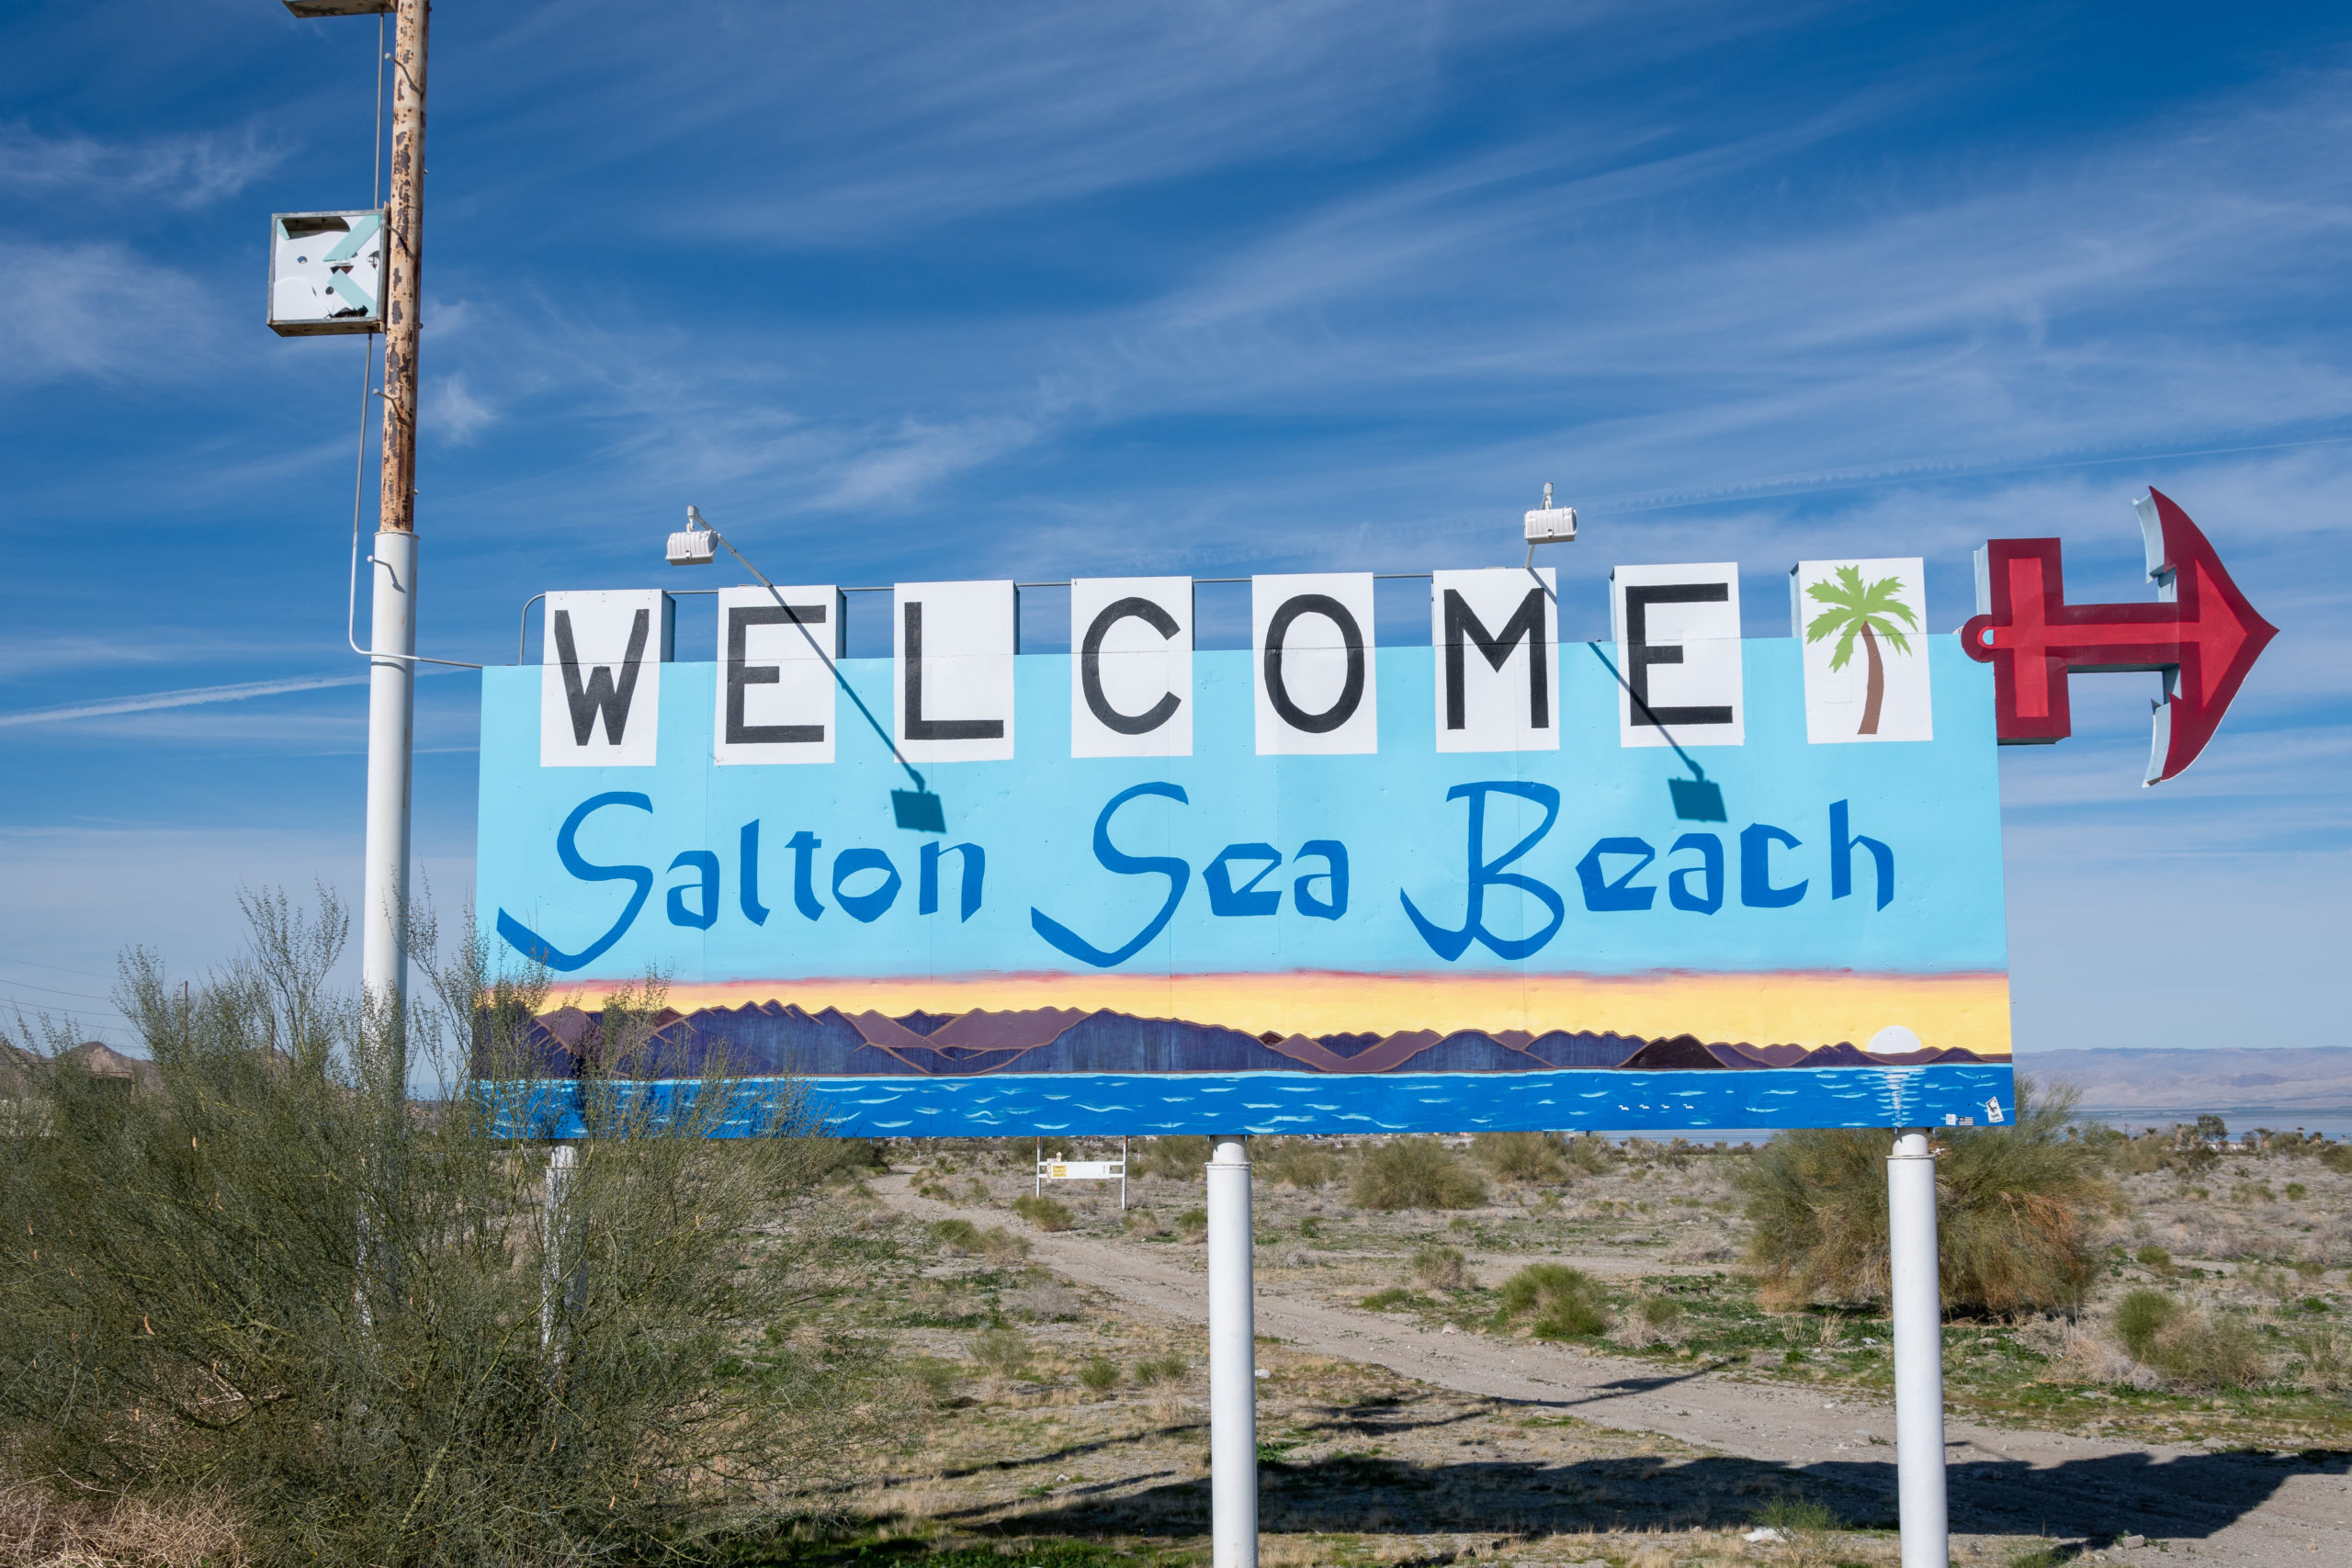 Slot Canyons and the Salton Sea